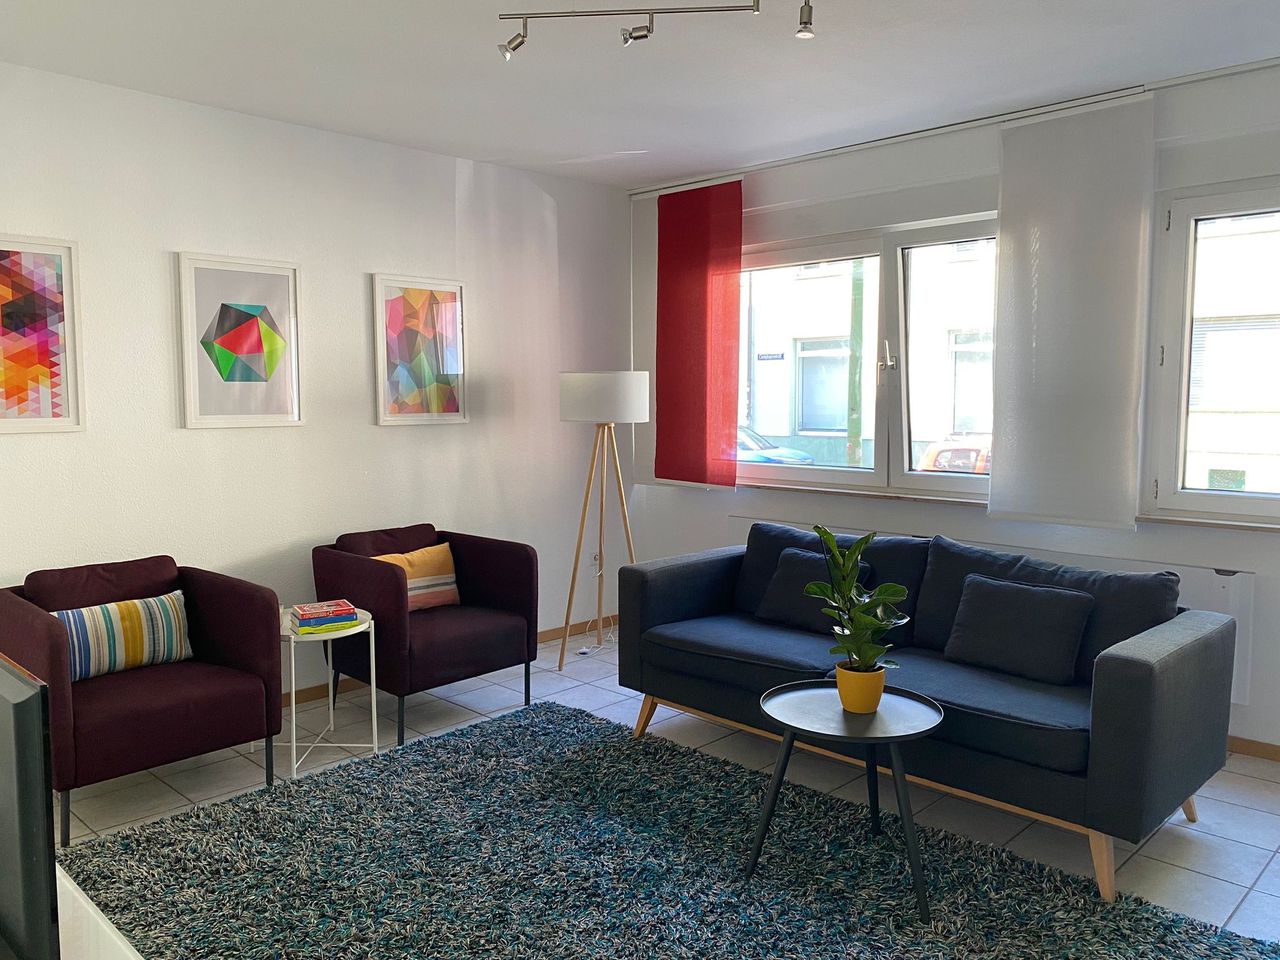 Modern and Cozy apartment in Essen - 5 minutes to Uniklinikum, Messe Gruga